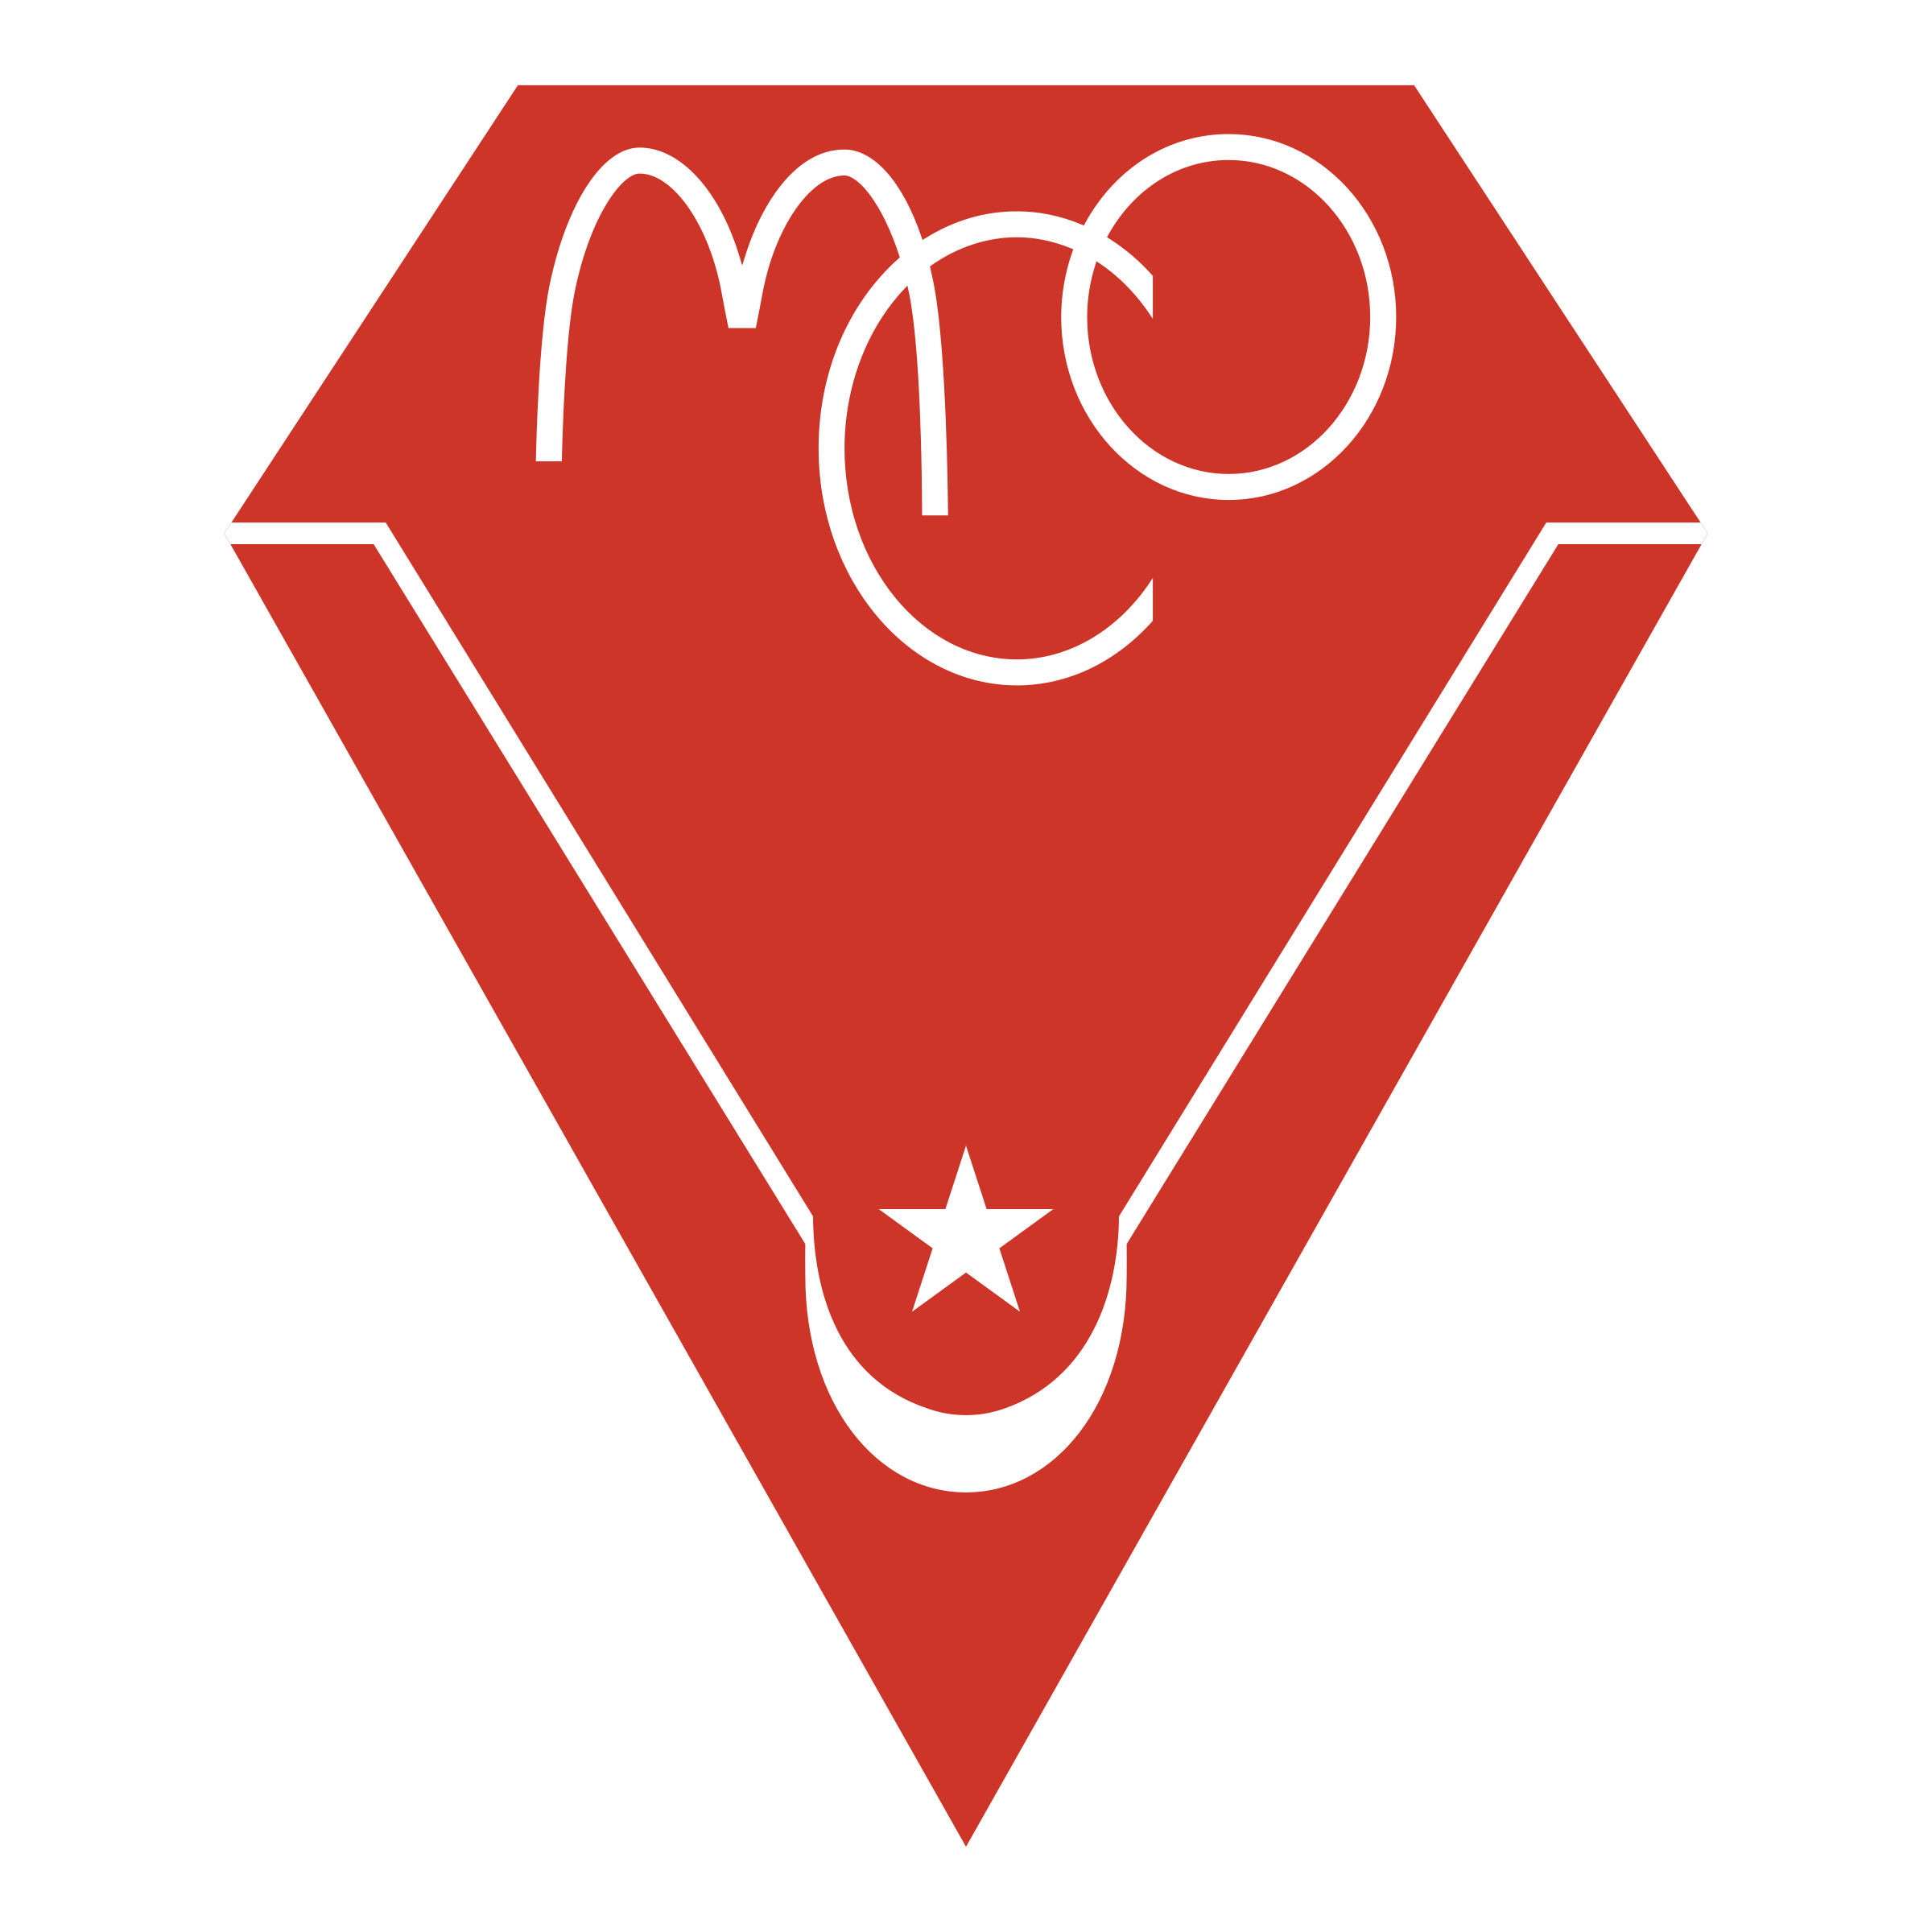 MCO Logo - MCO Logo PNG Transparent & SVG Vector - Freebie Supply